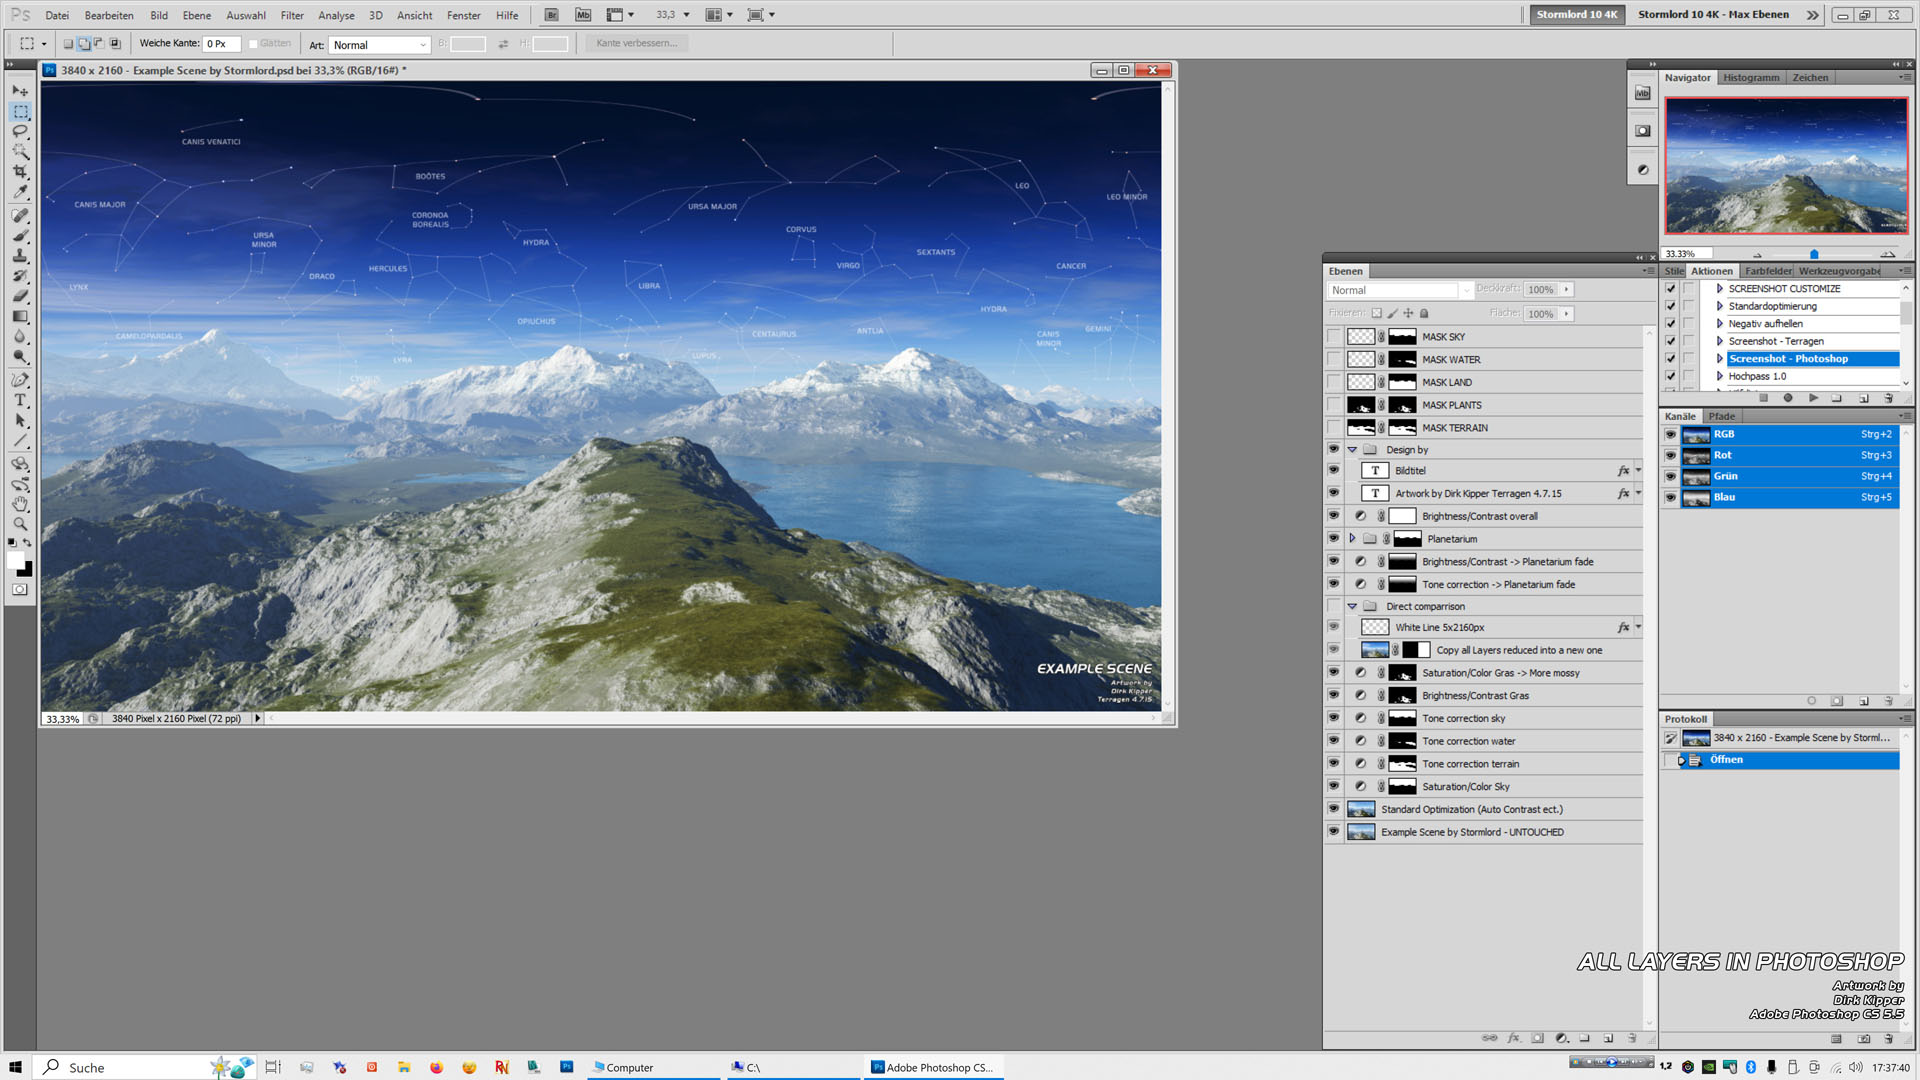 9 - Example Scene by Stormlord - Planetarium mode (Adobe Photoshop CS 5.5).jpg